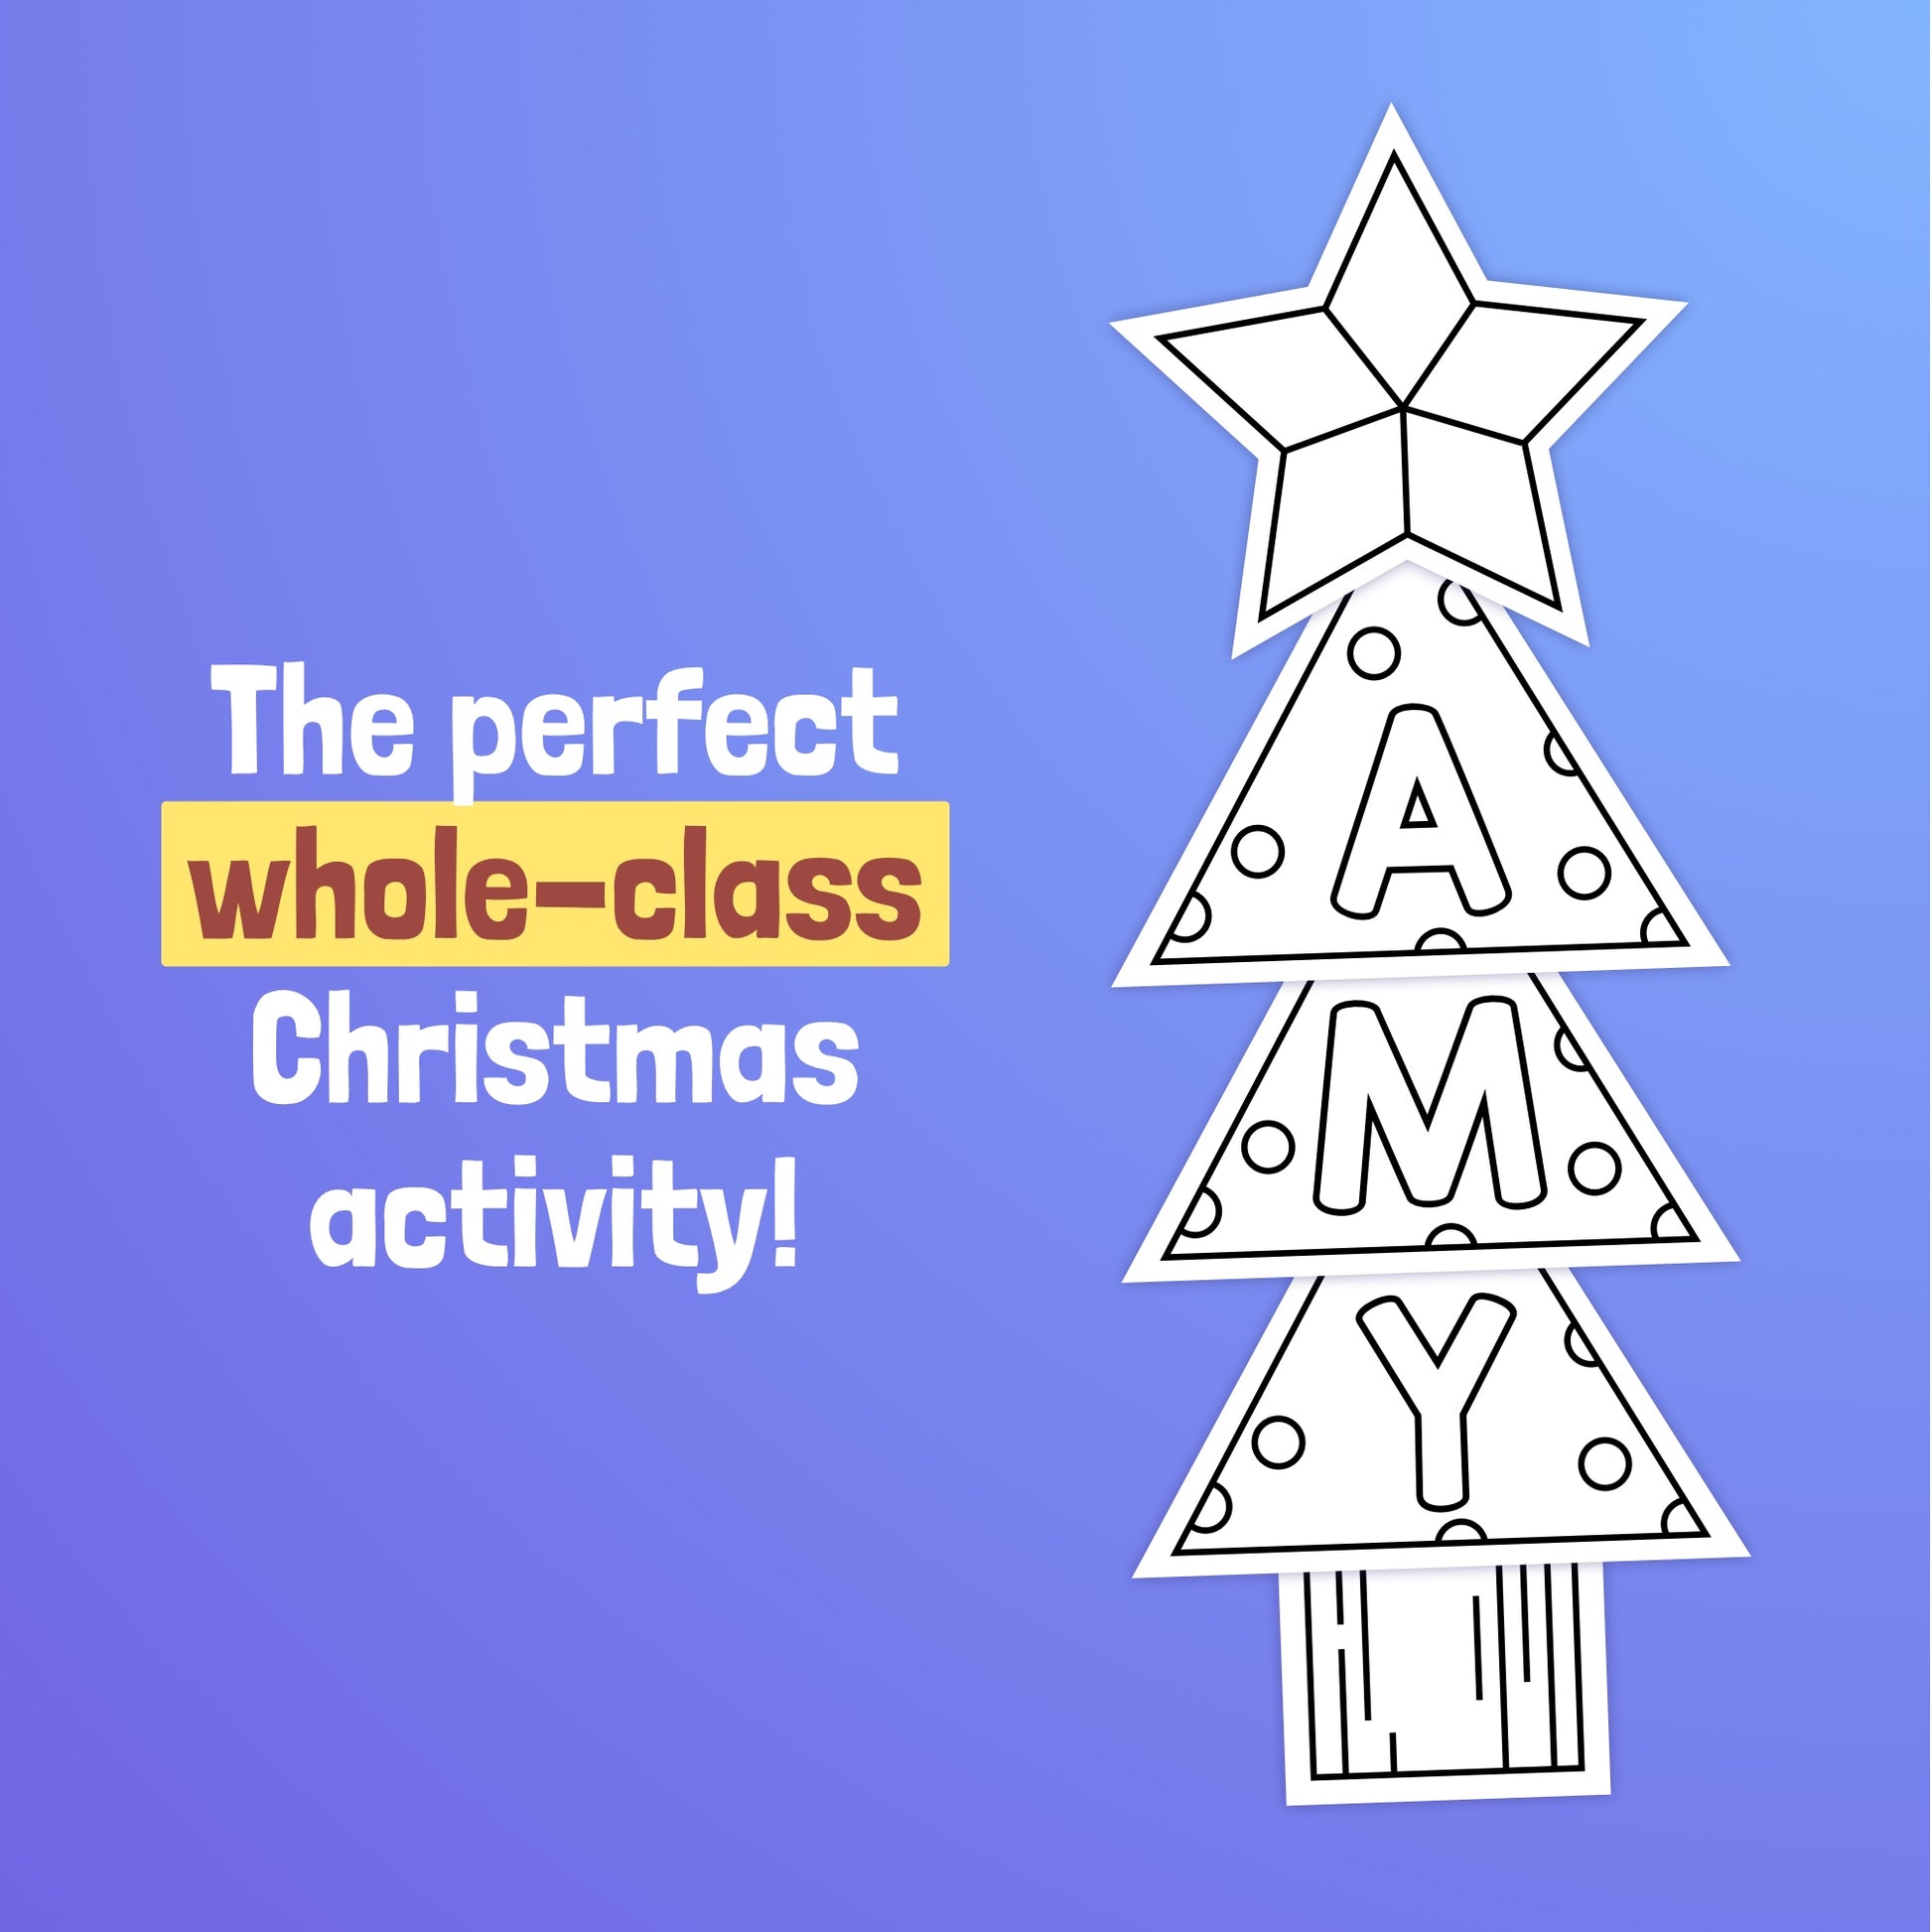 Whole-class Christmas craftivity